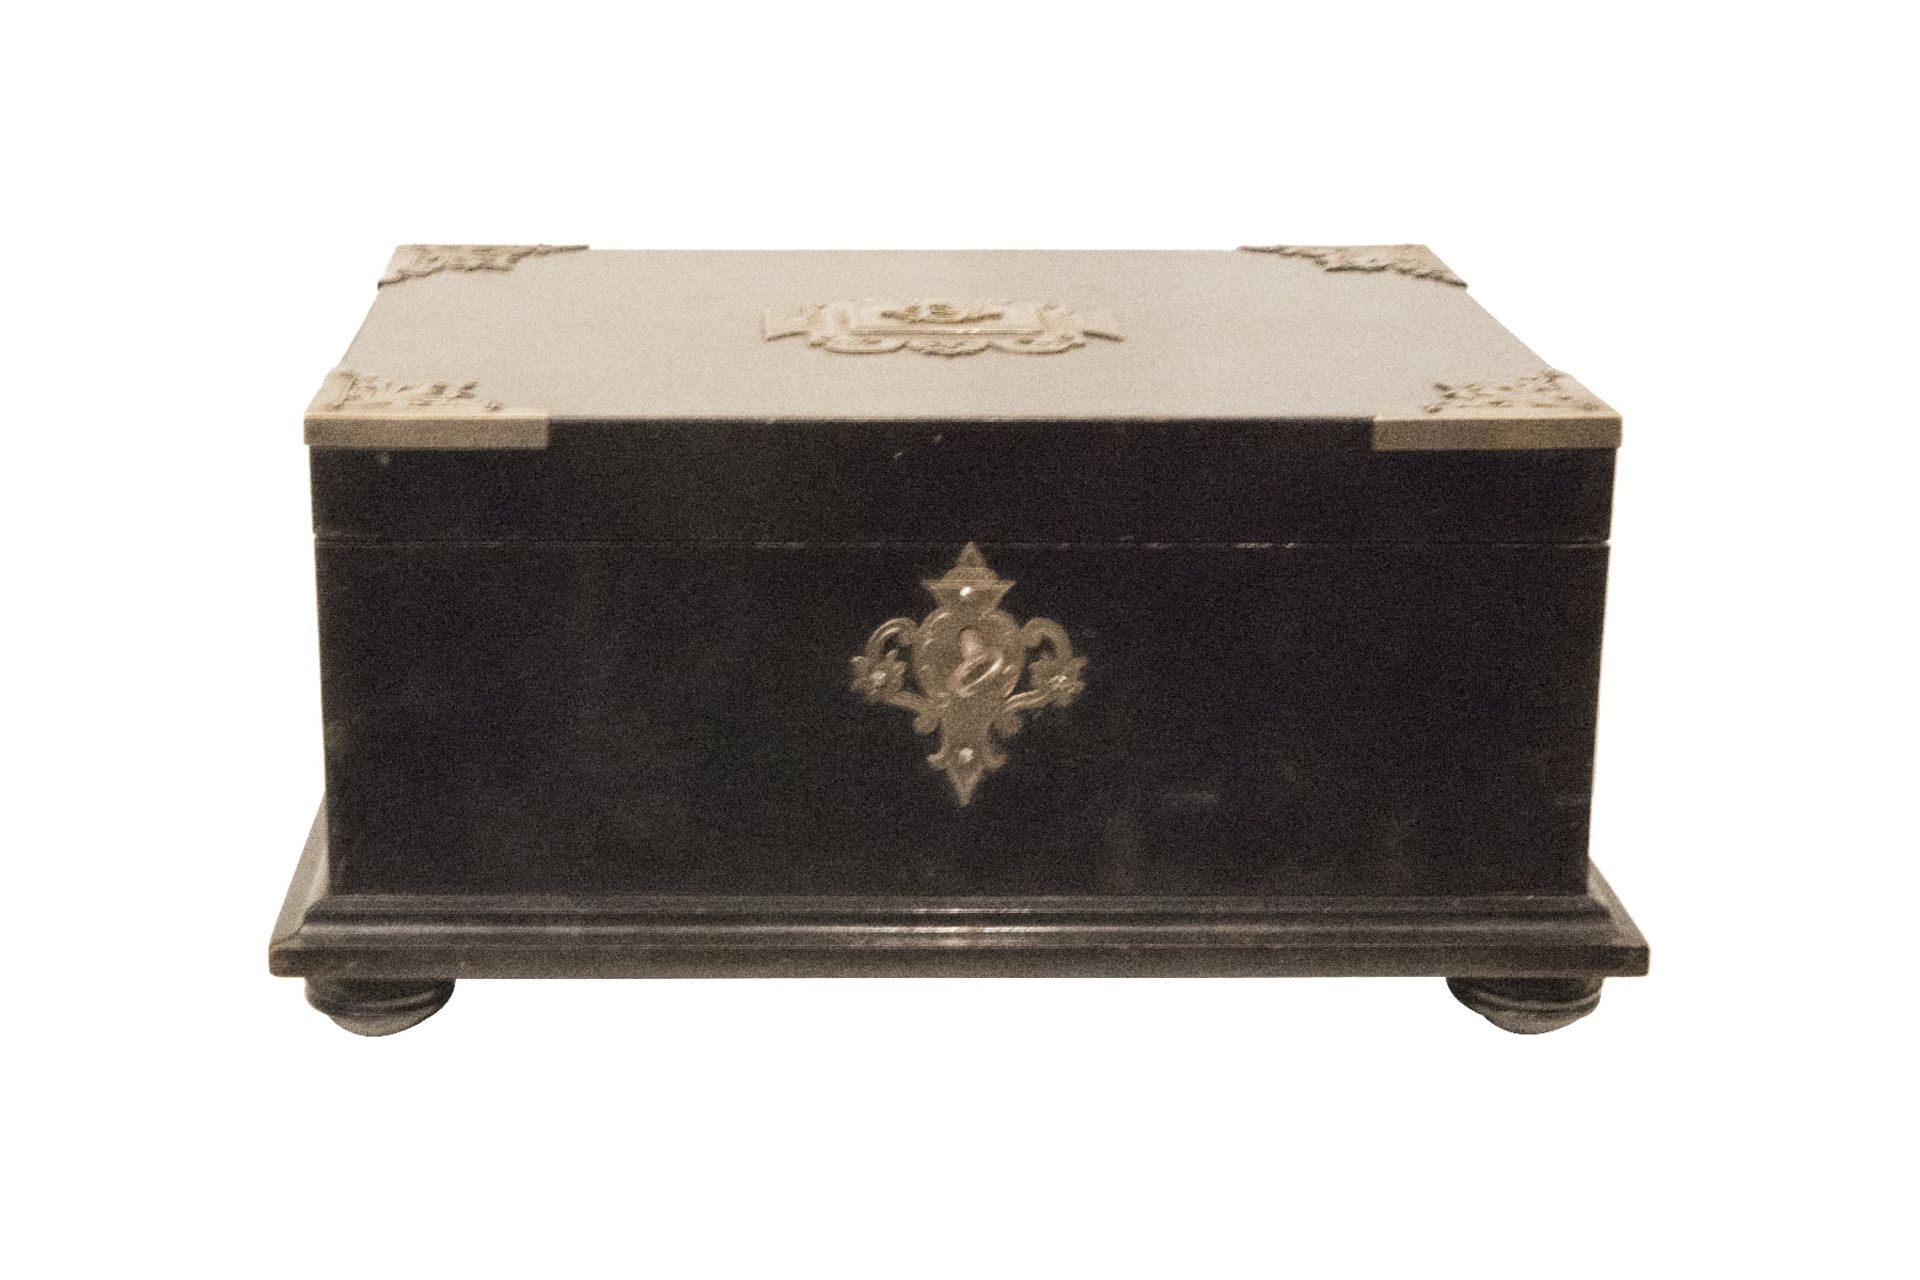 Holzschatulle mit Metallbeschlaegen | Wooden casket with metal fittings - Image 3 of 9